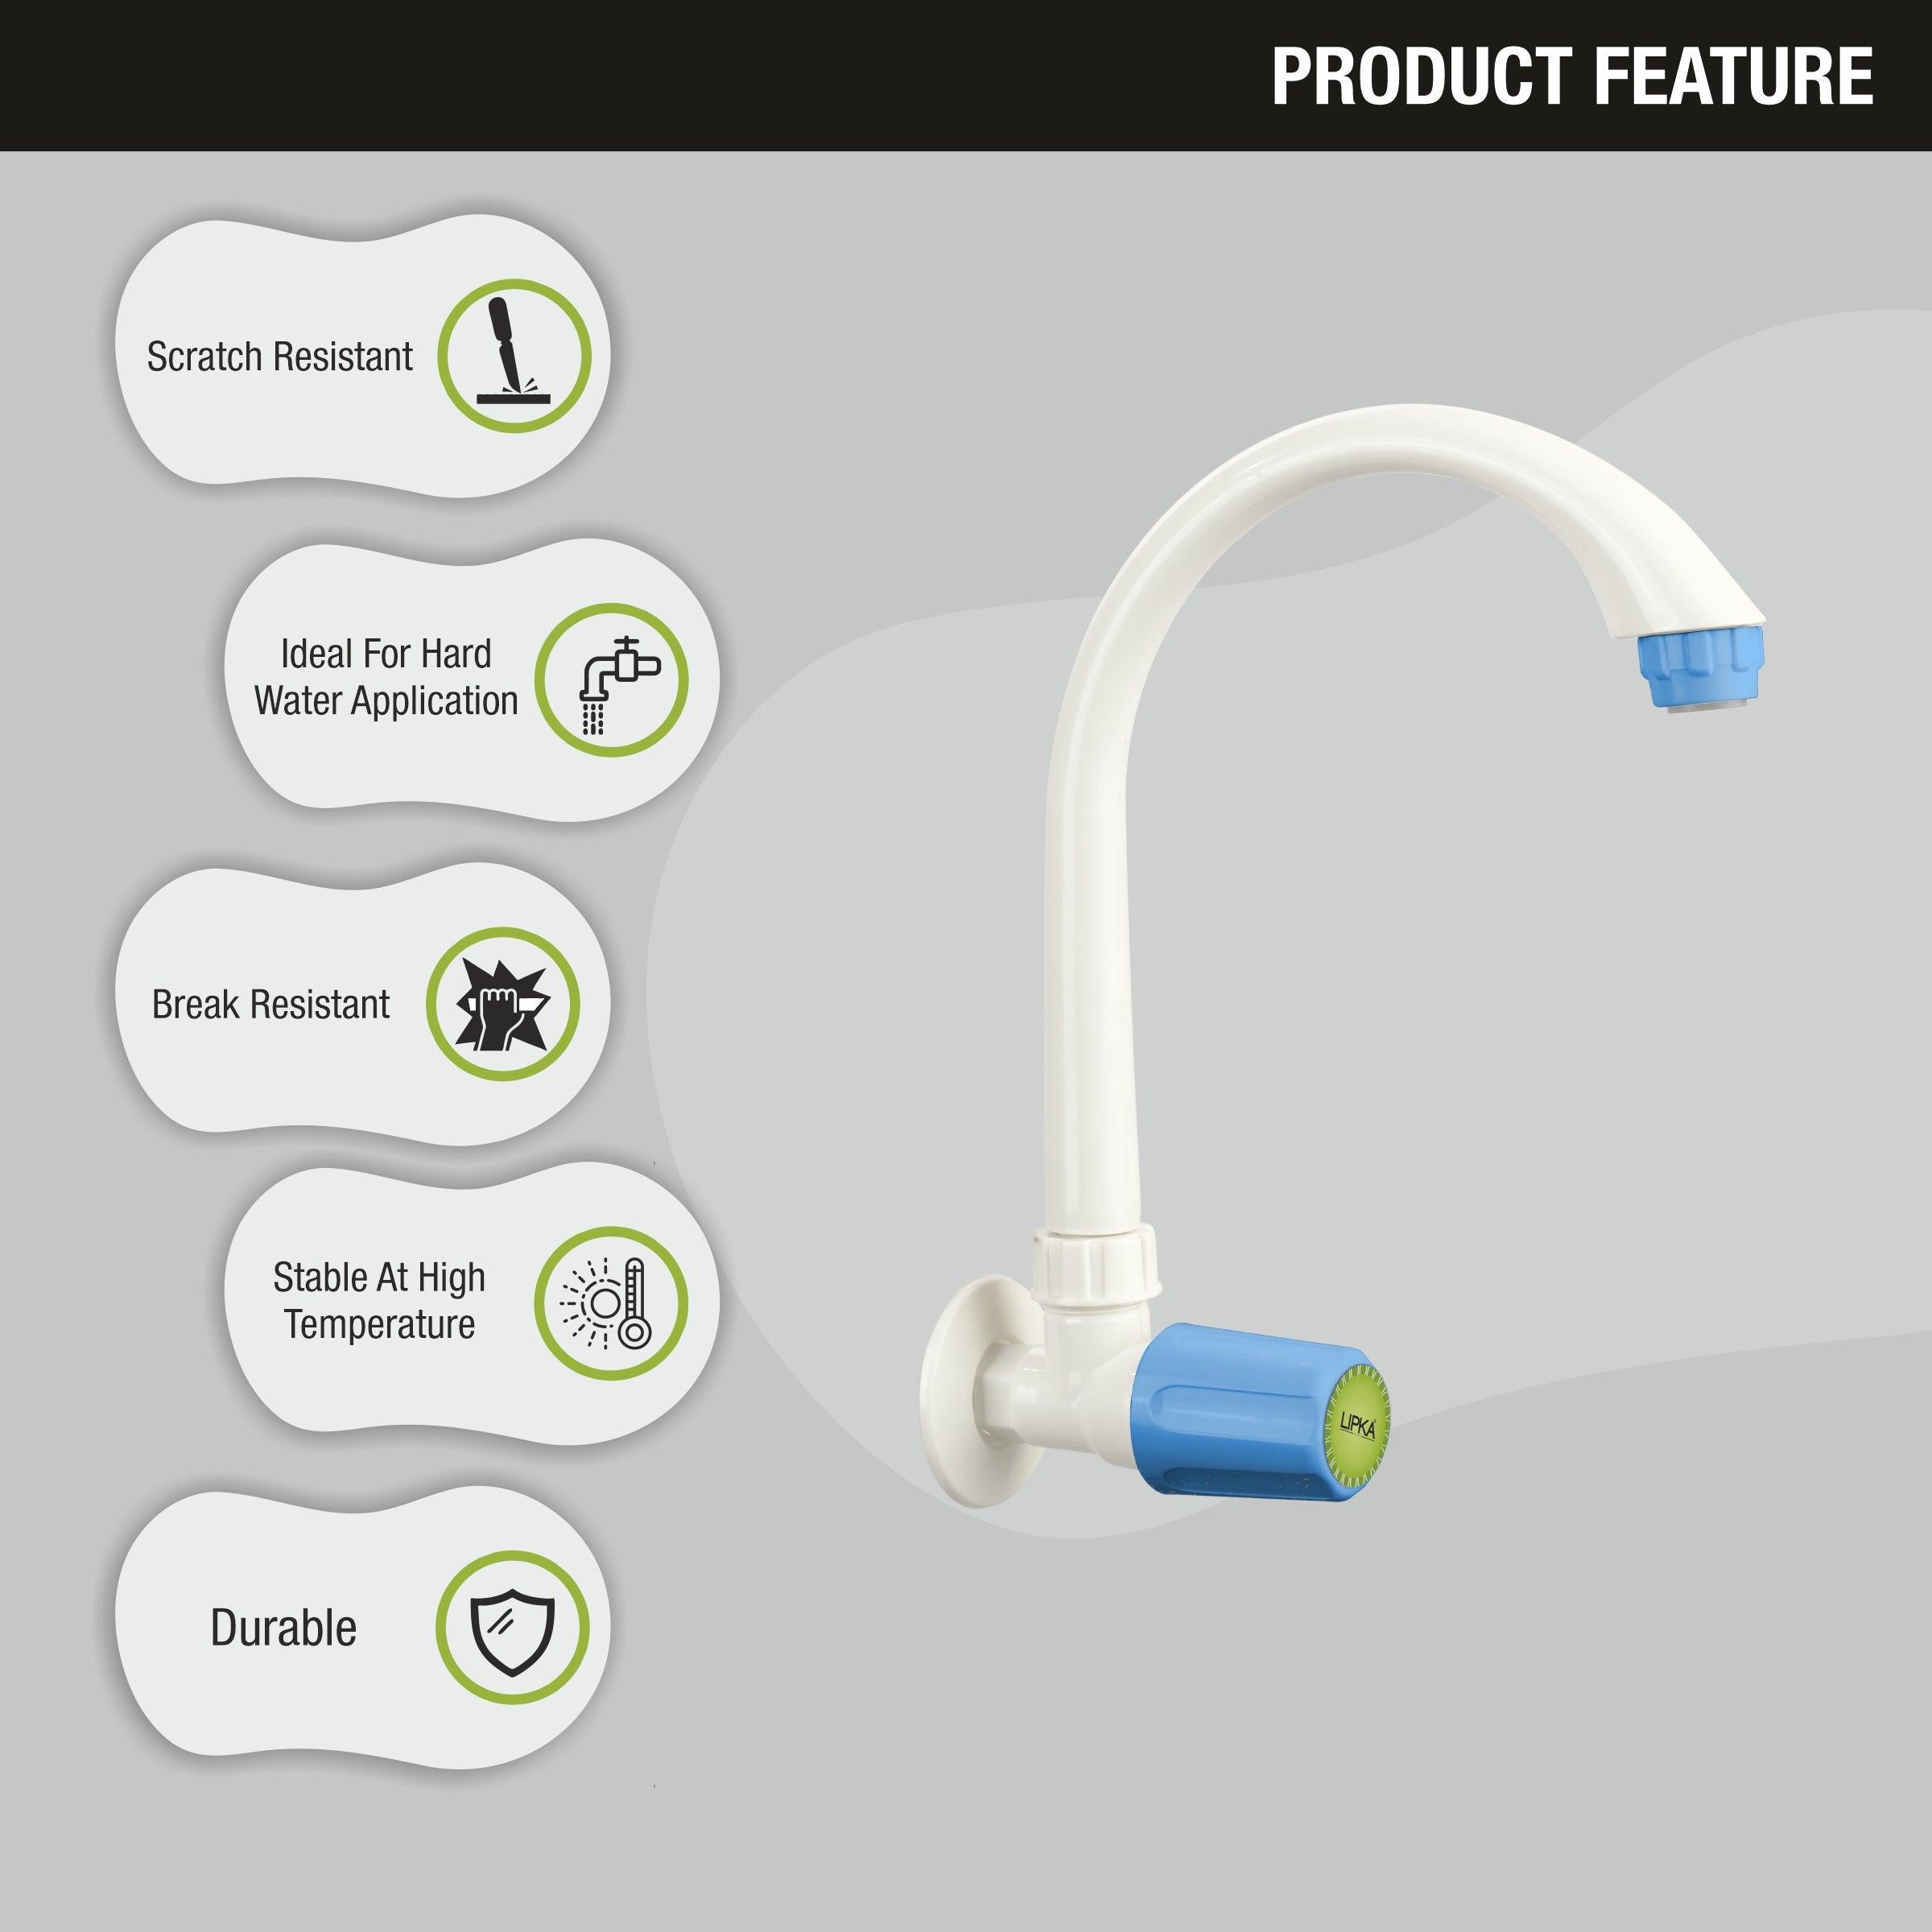 Nobel Sink Tap with Swivel Spout PTMT Faucet features